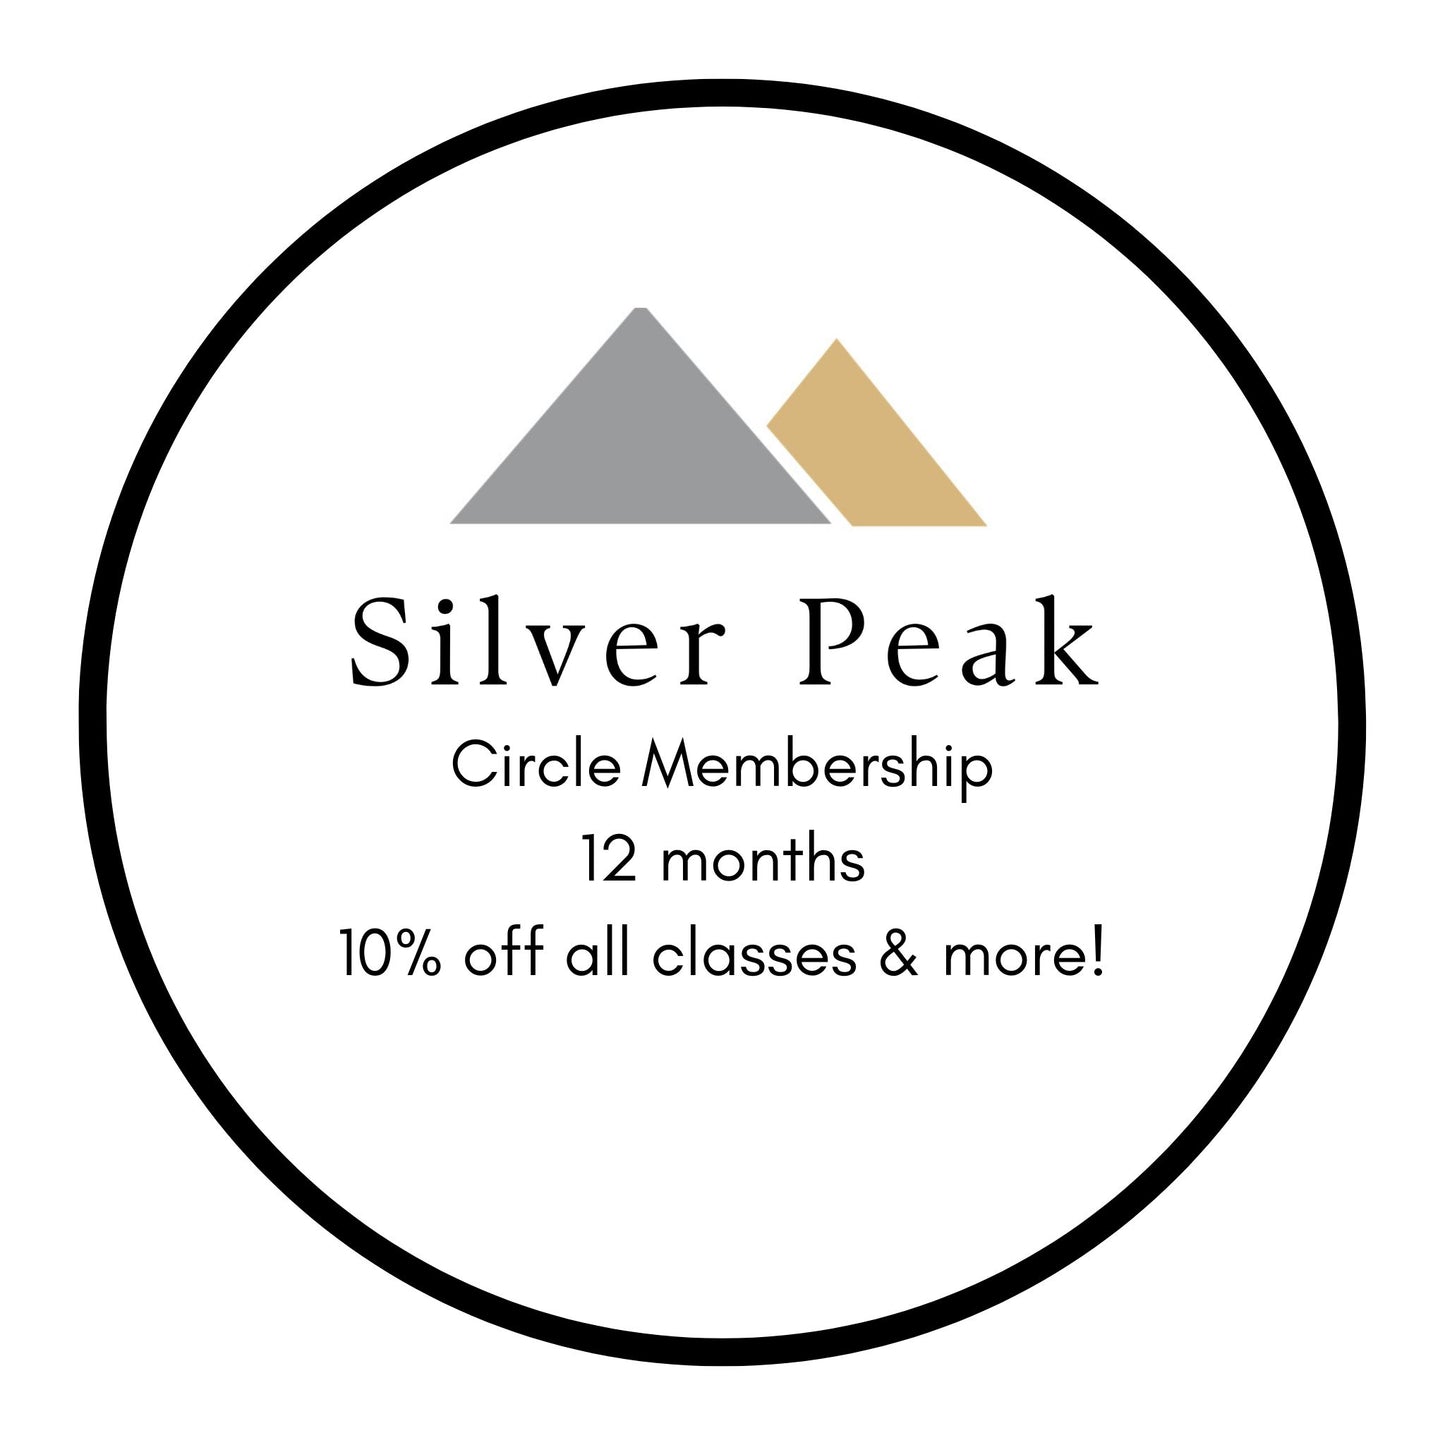 Silver Peak Circle Membership